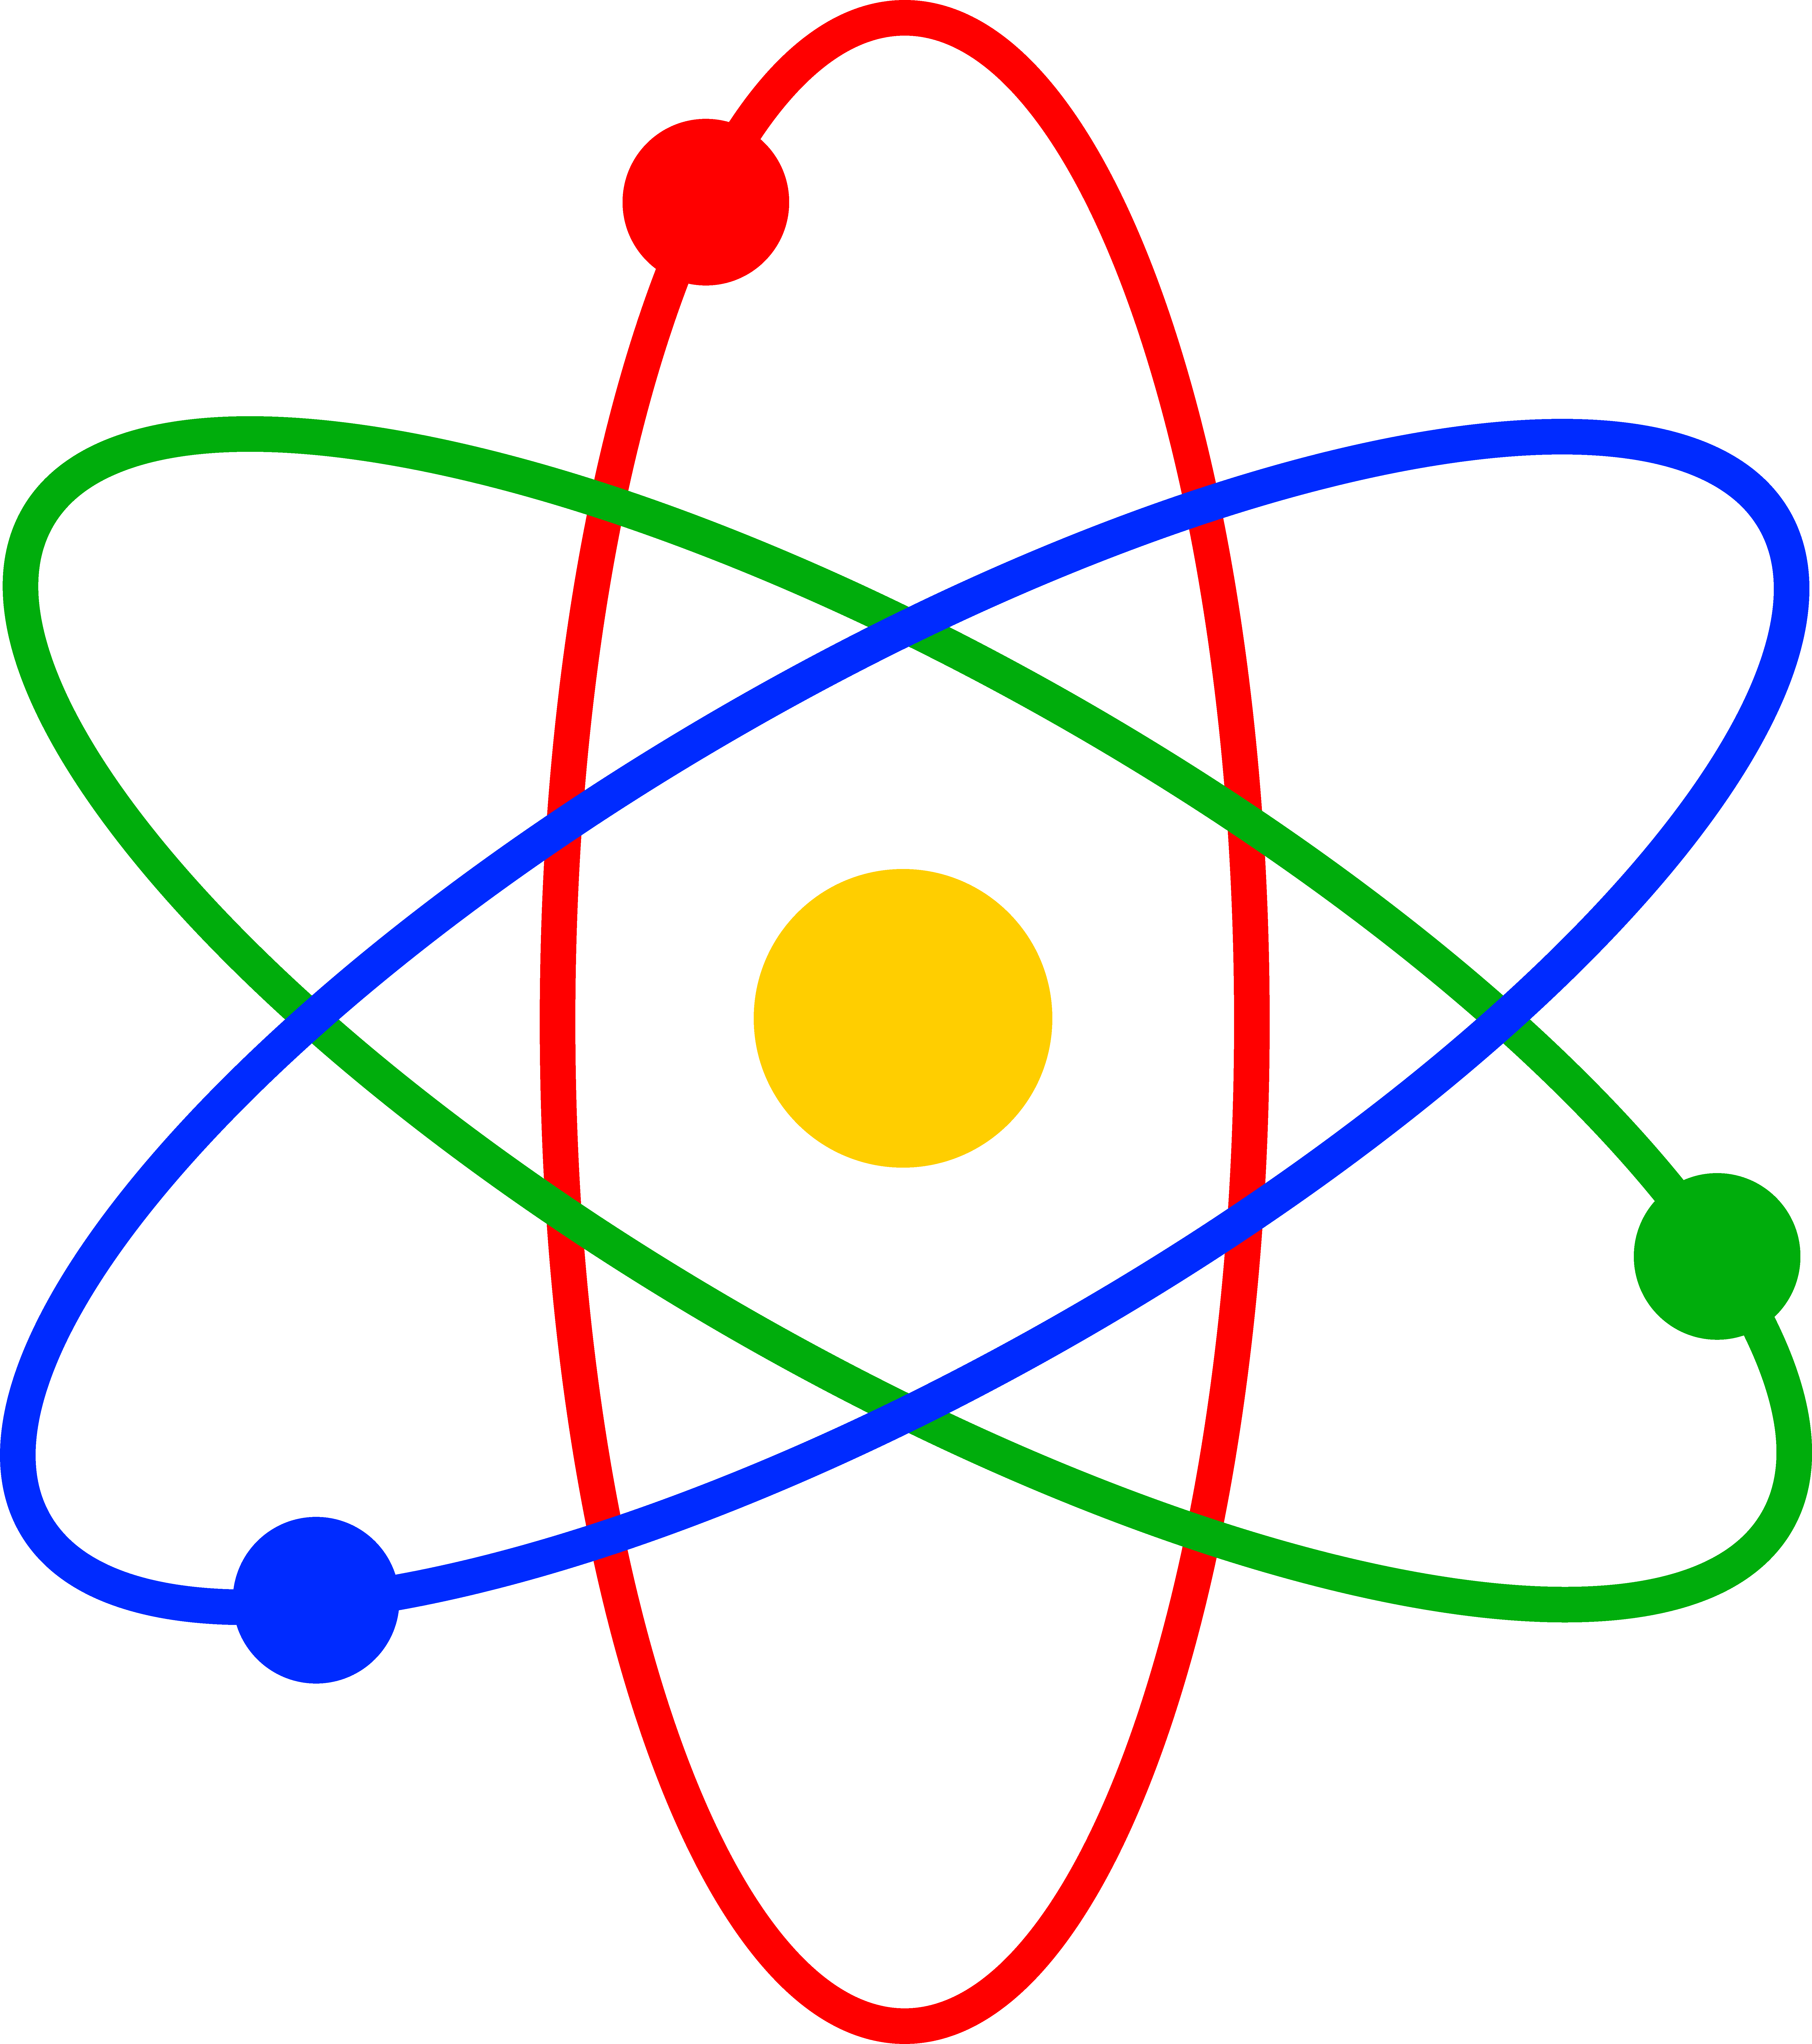 Science Symbols Clip Art - Cliparts.co